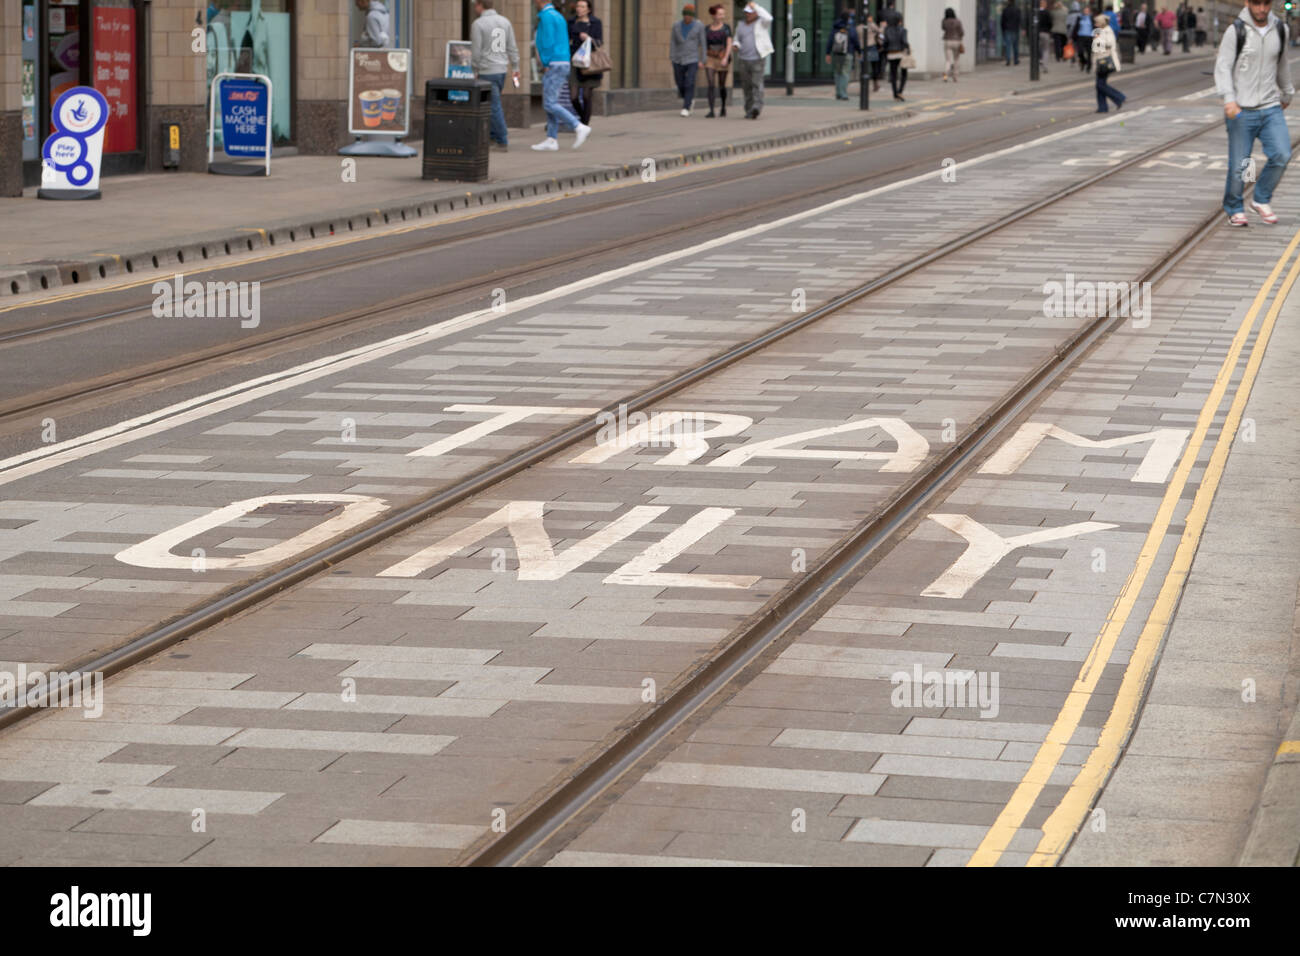 Metrolink tram track in Manchester, UK Stock Photo